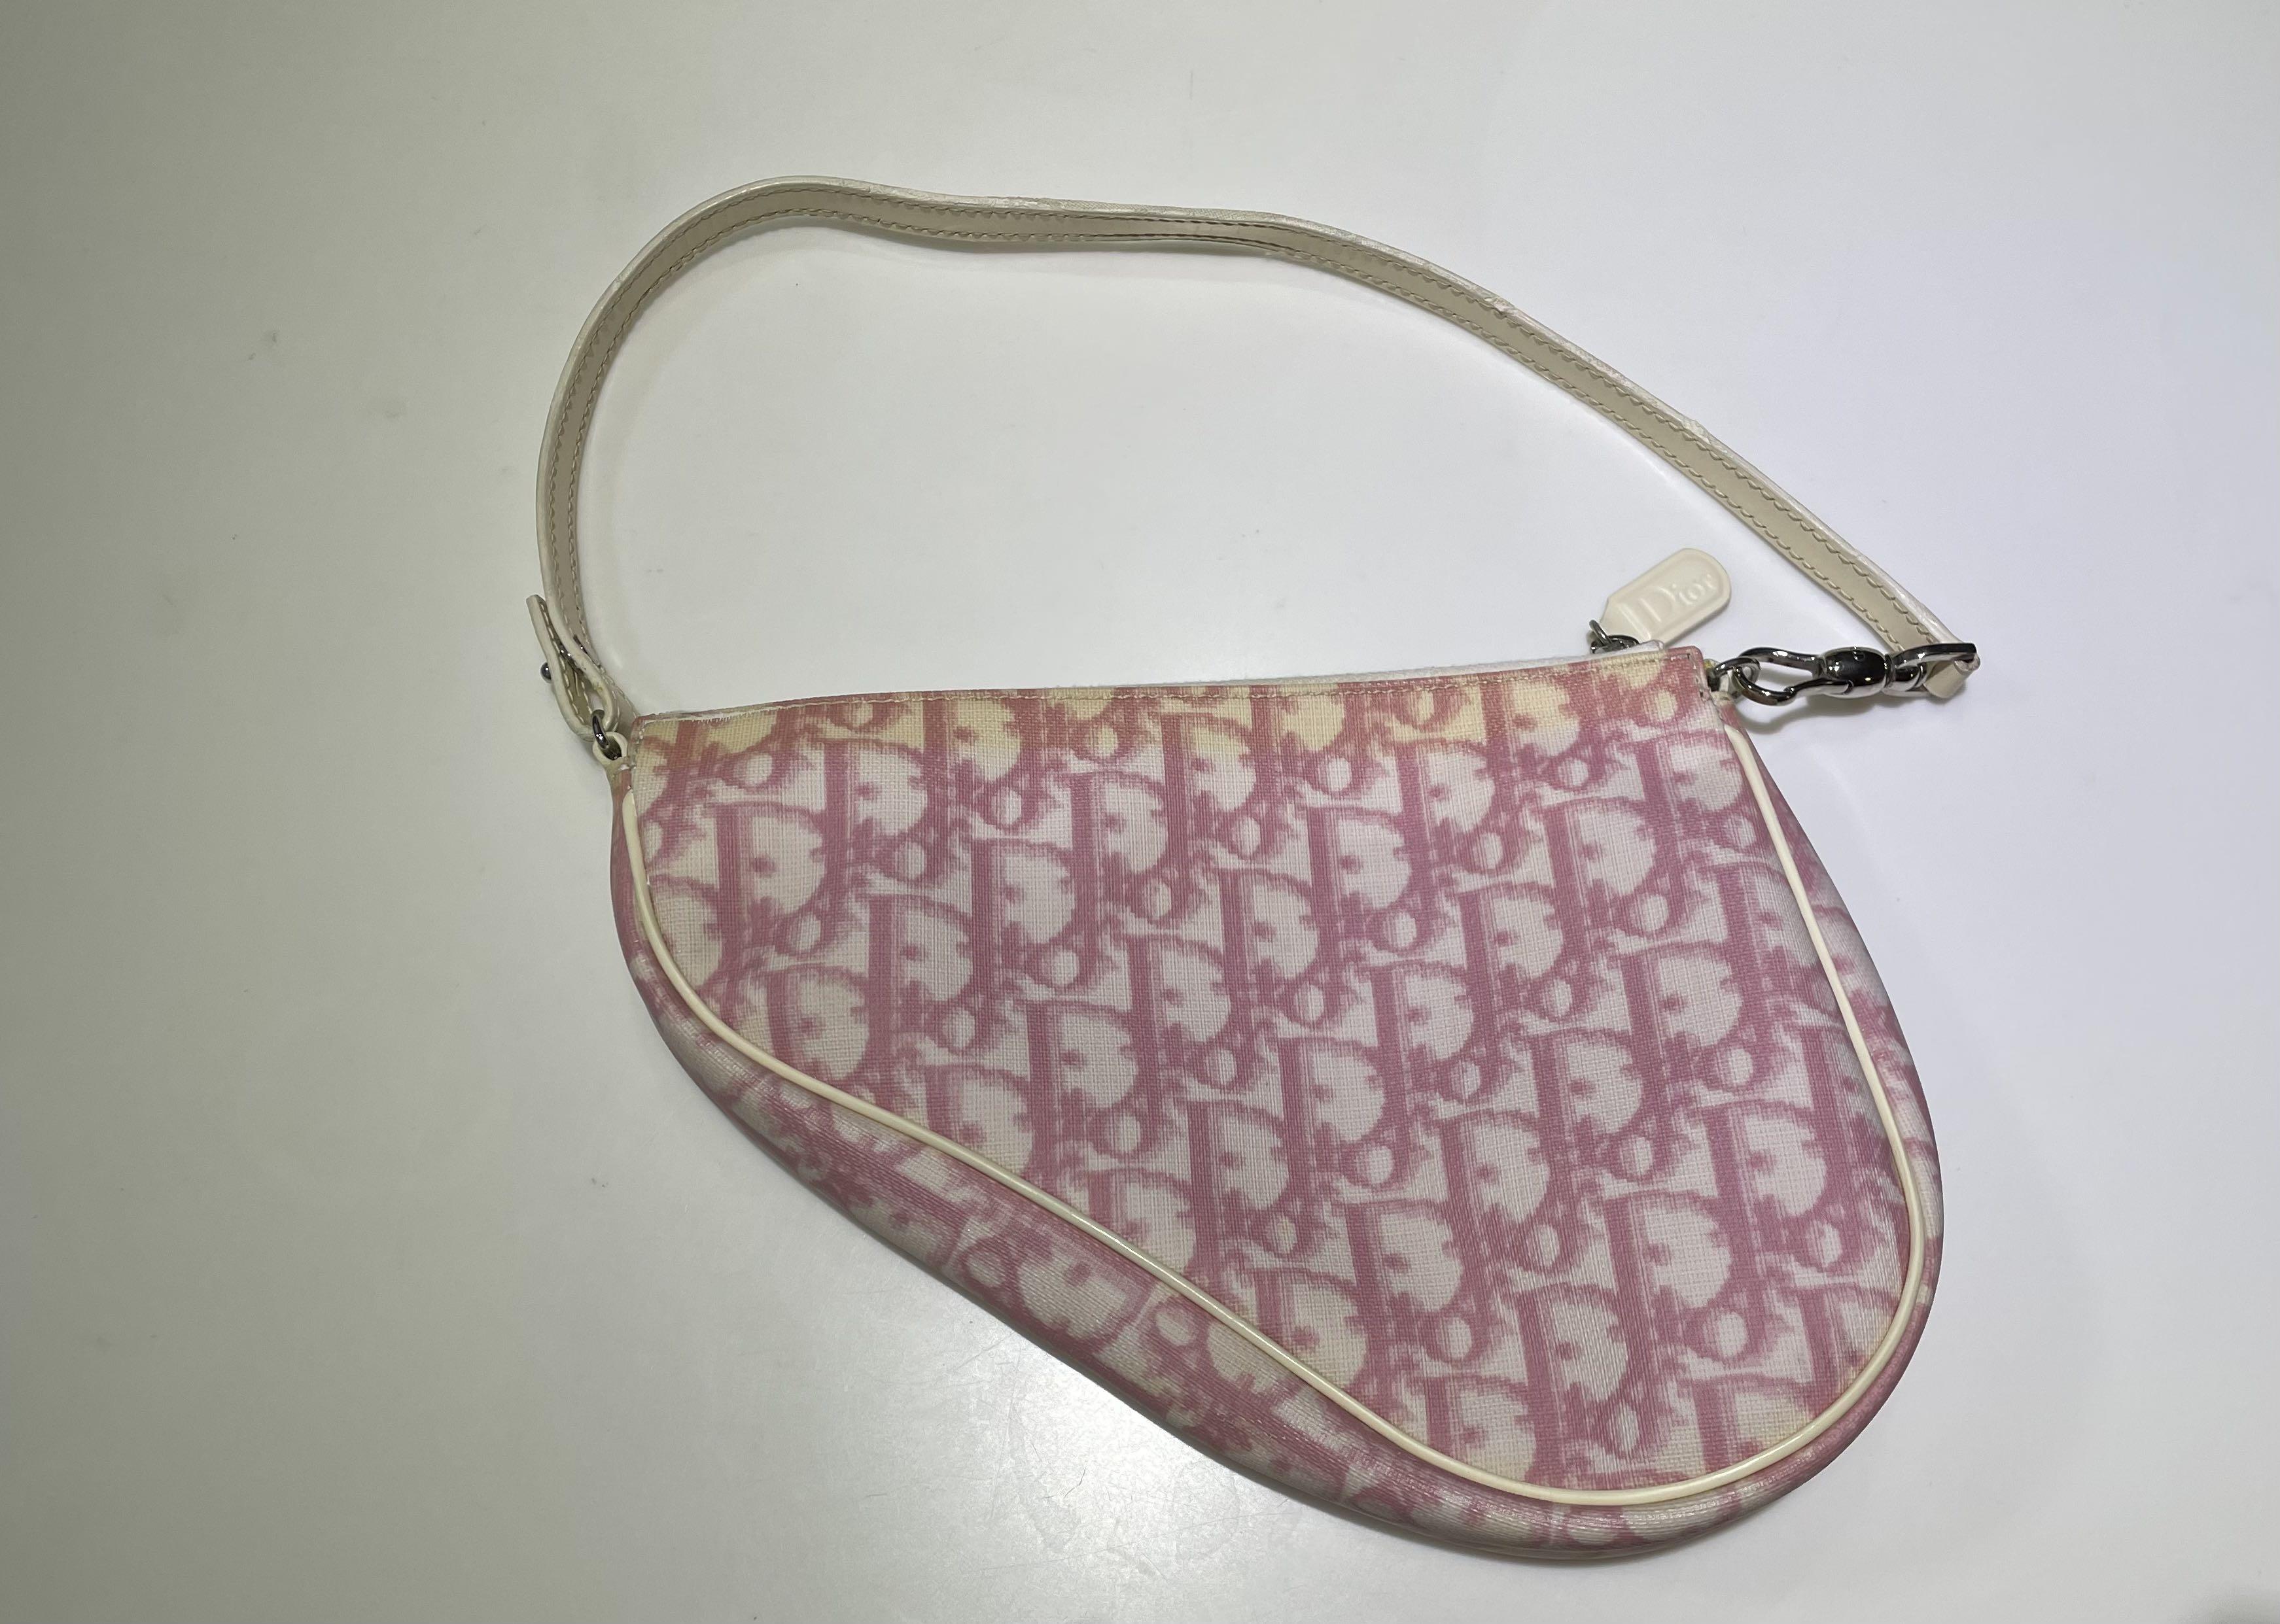 Restoringcleaning vintage pink saddle bag  Y2k mini bag haul coming    TikTok